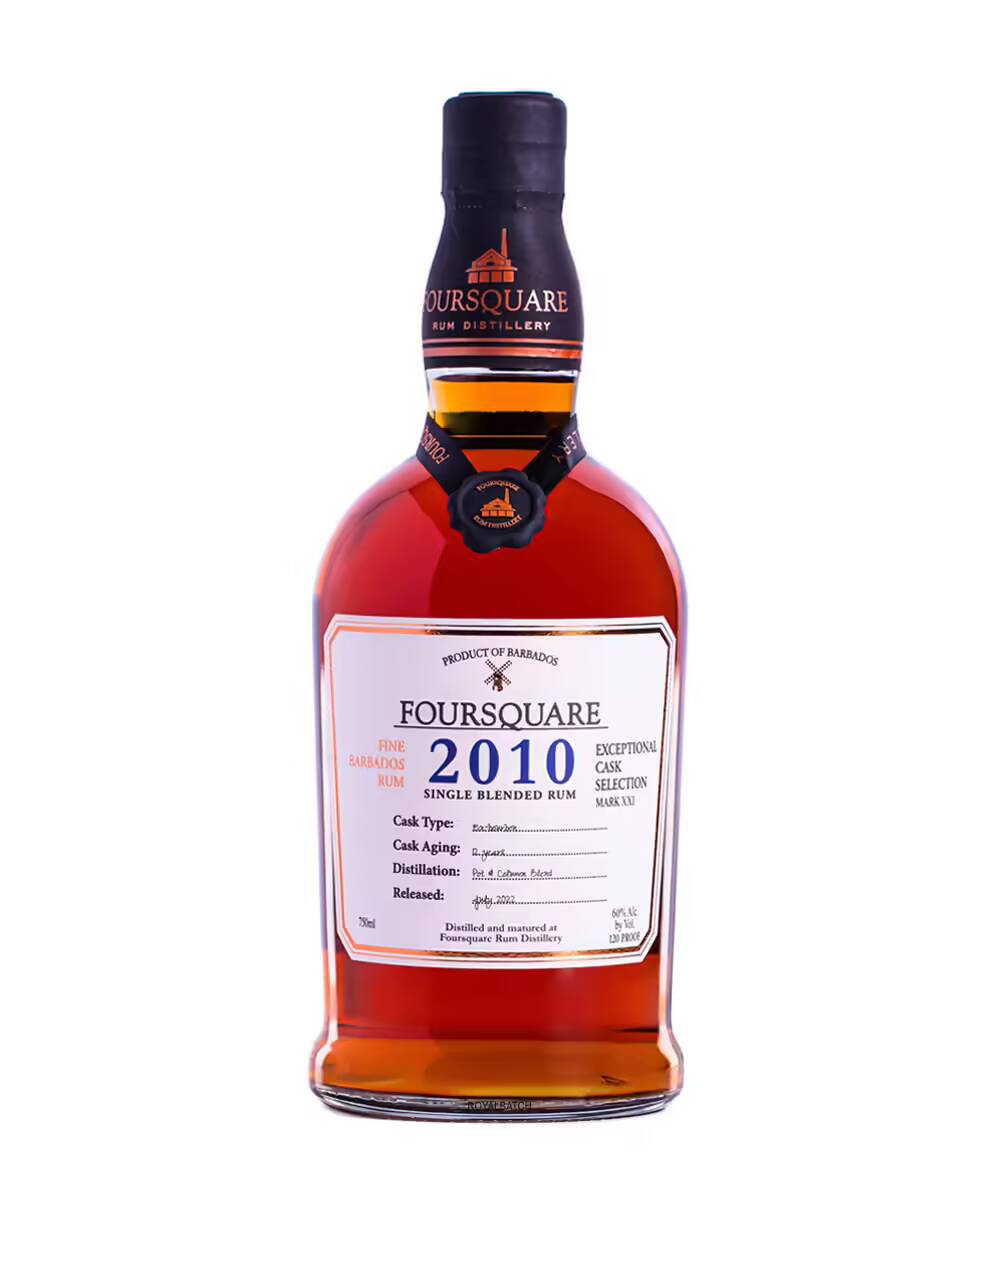 Foursquare Fine Barbados Rum 2010 Exceptional Cask Selection Mark XXI